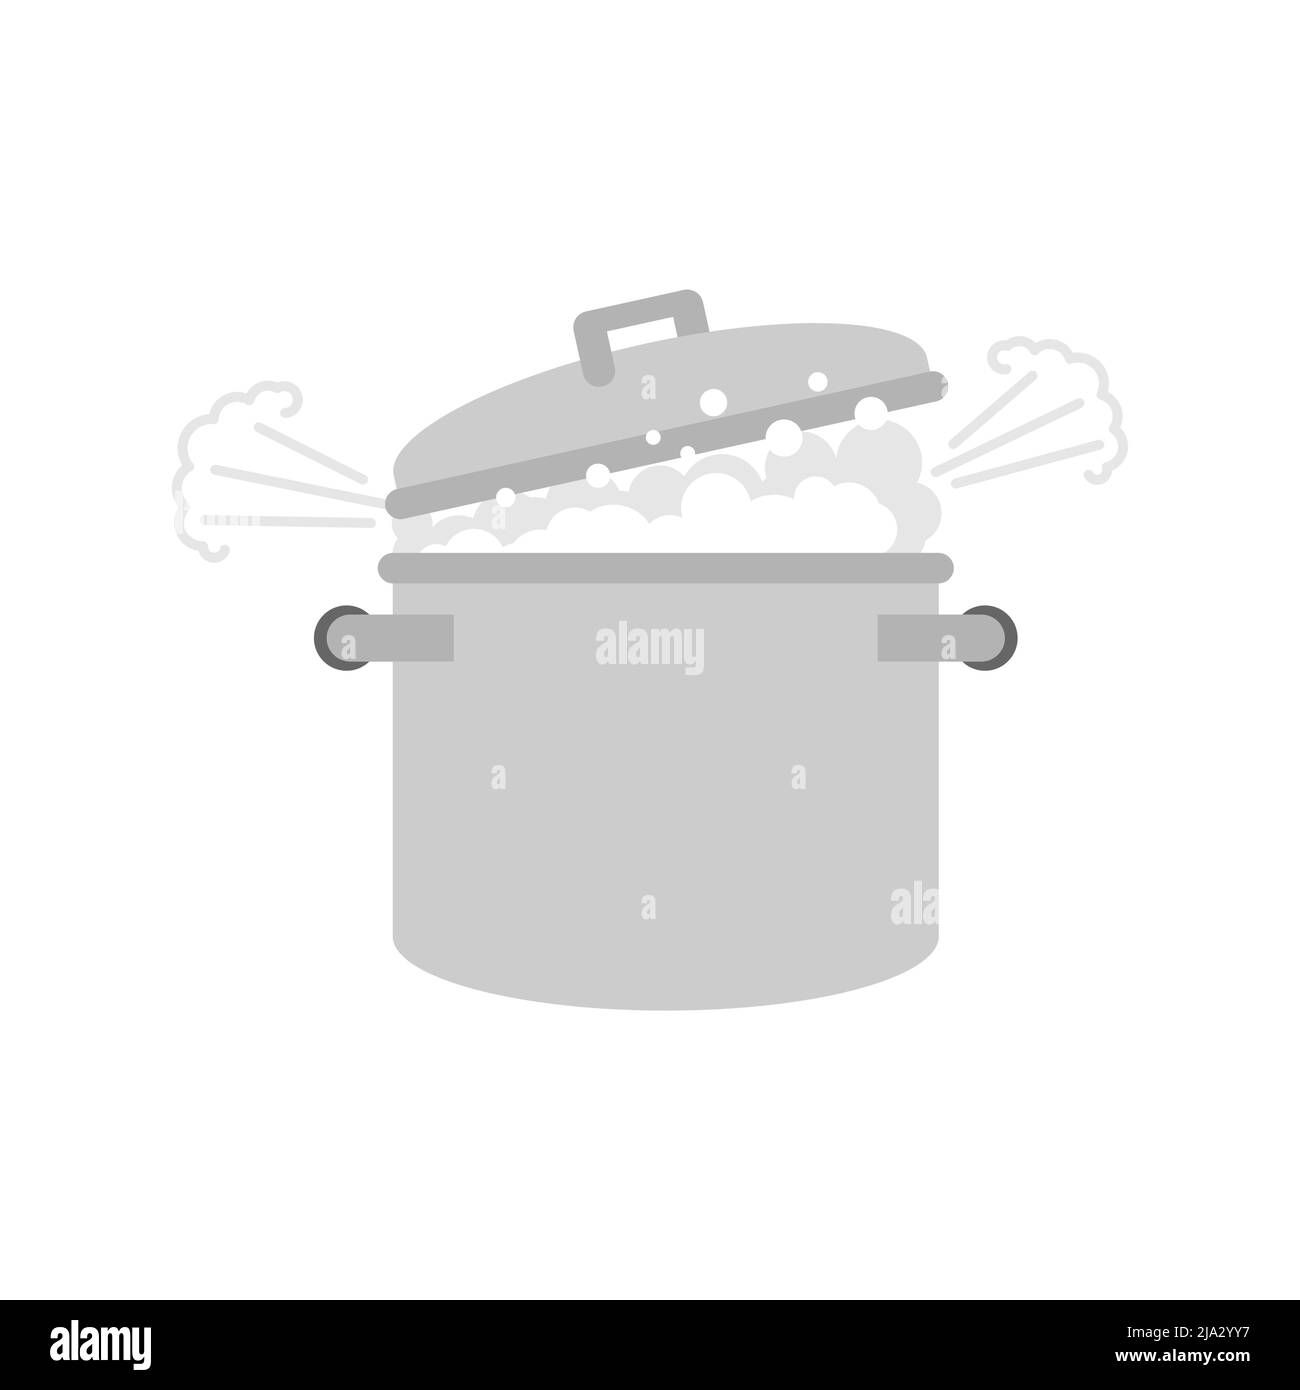 https://c8.alamy.com/comp/2JA2YY7/boiling-pot-isolated-pot-is-boiling-vector-illustration-2JA2YY7.jpg